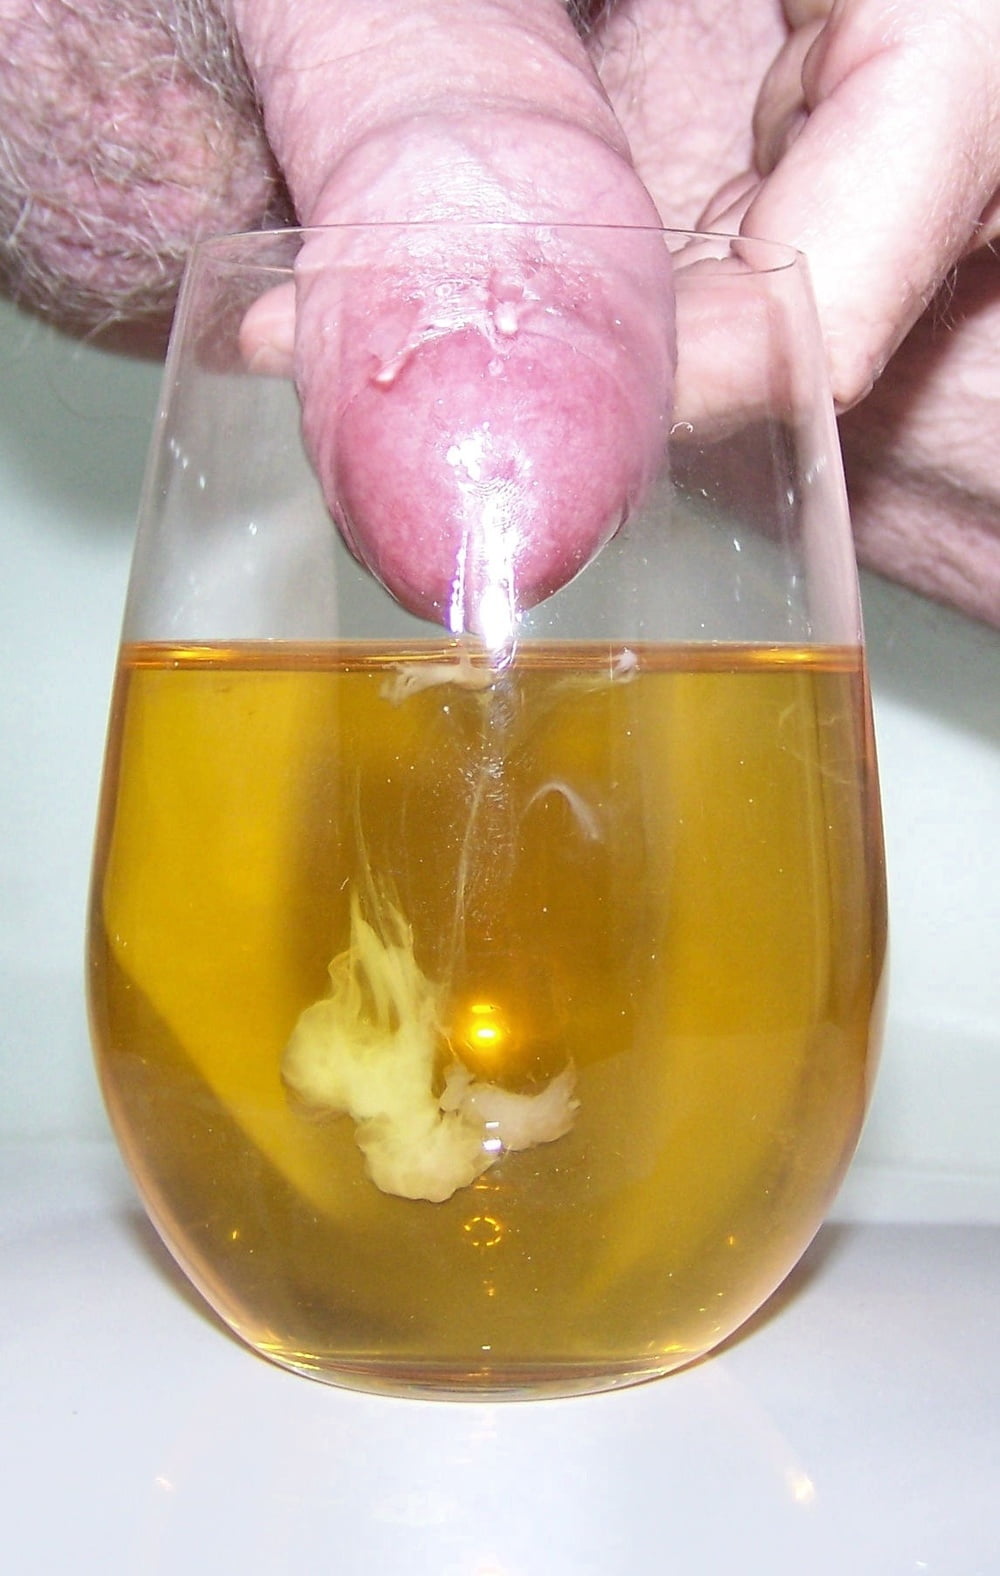 сперма при мочеиспускании мужчин фото 87